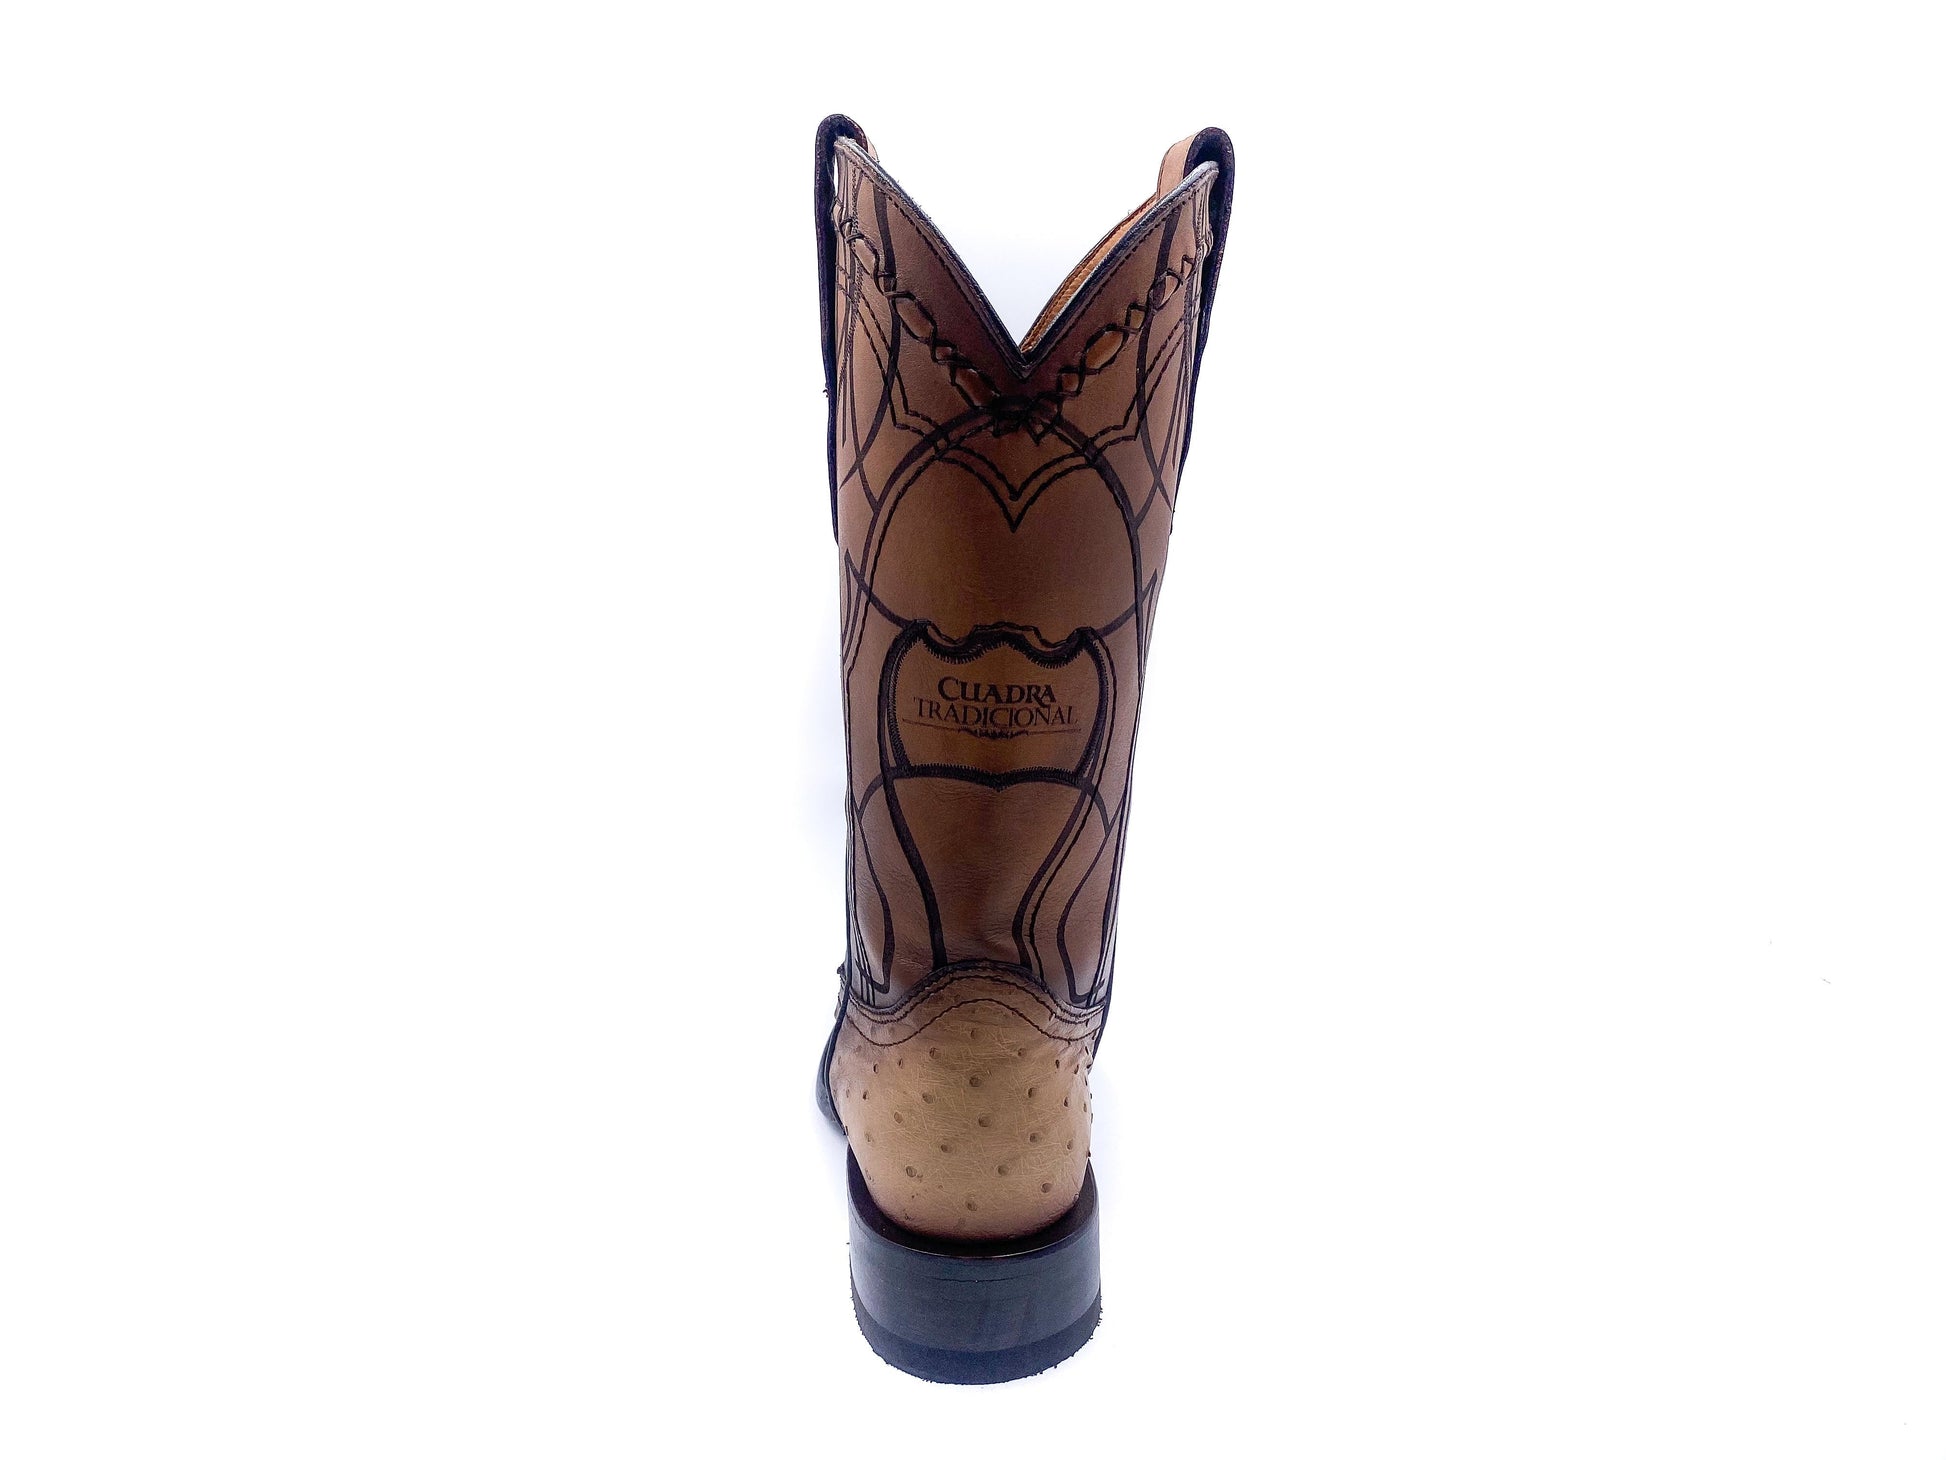 3Z1OA1 - Cuadra orix classic cowboy rodeo ostrich leather boots for men-Kuet.us